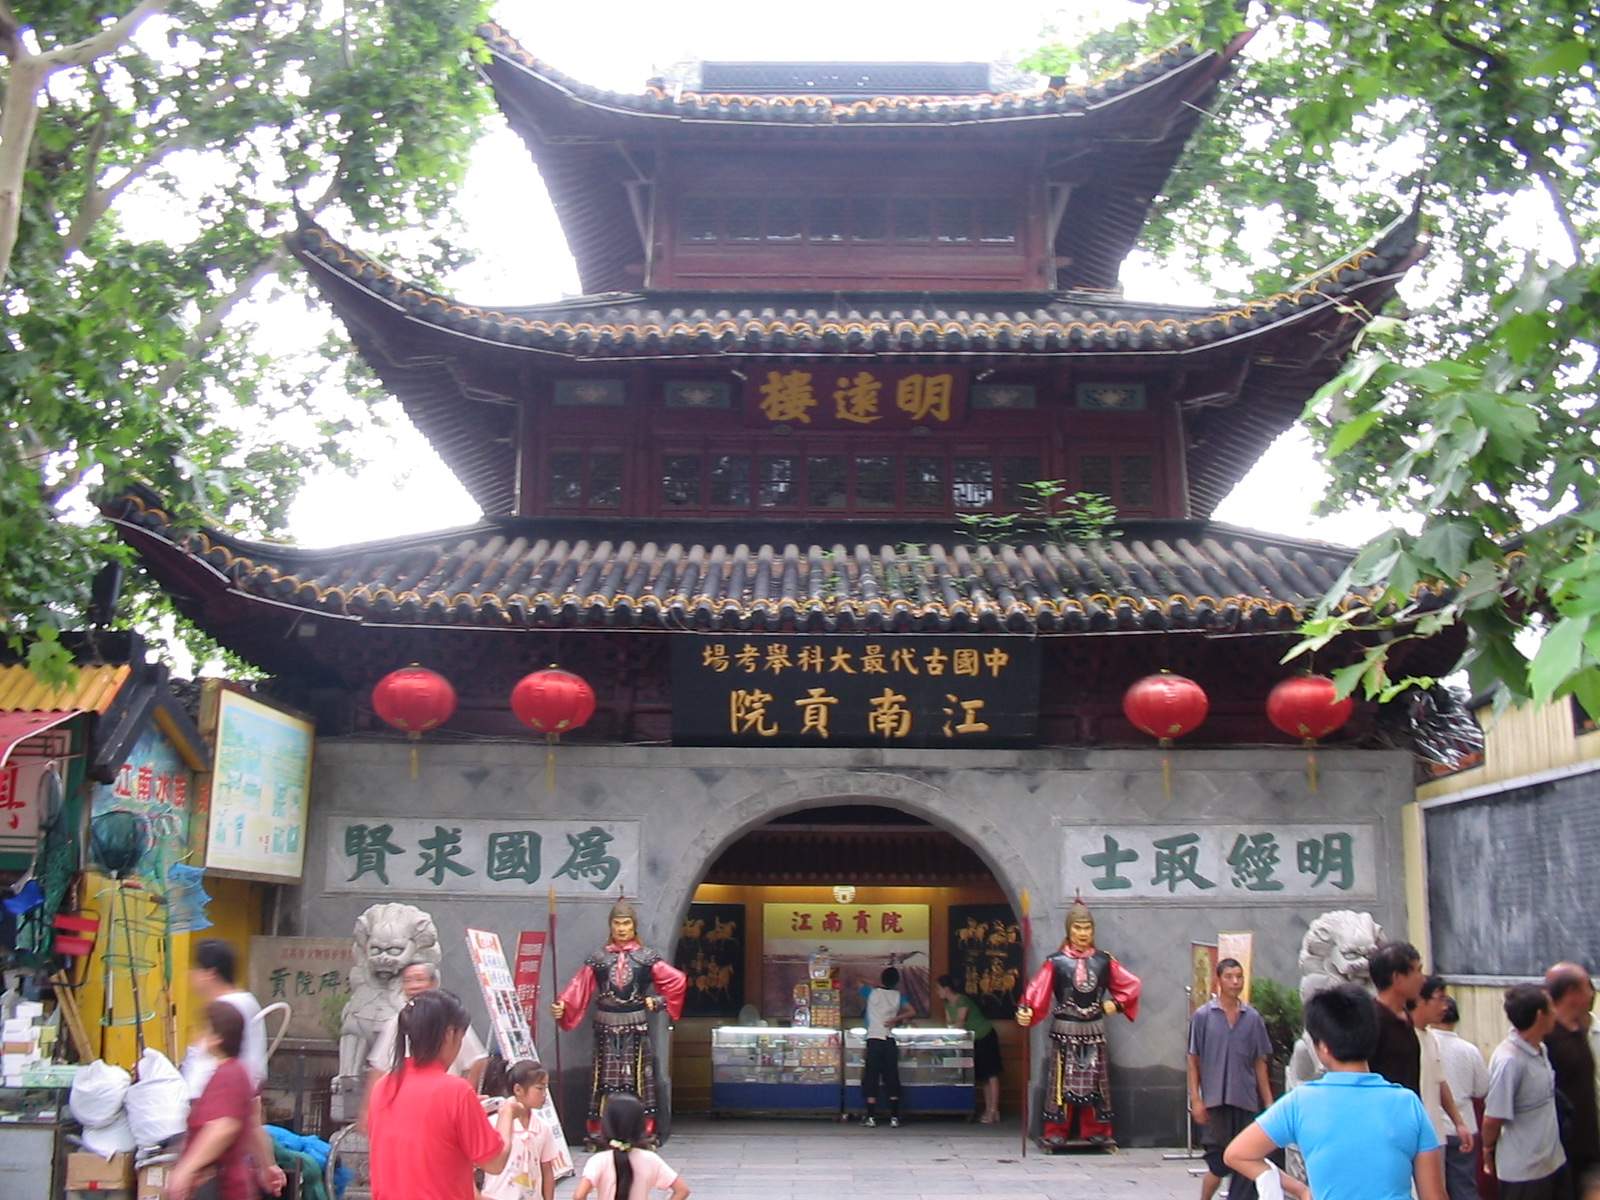 Jiangnan Imperial Examination Museum